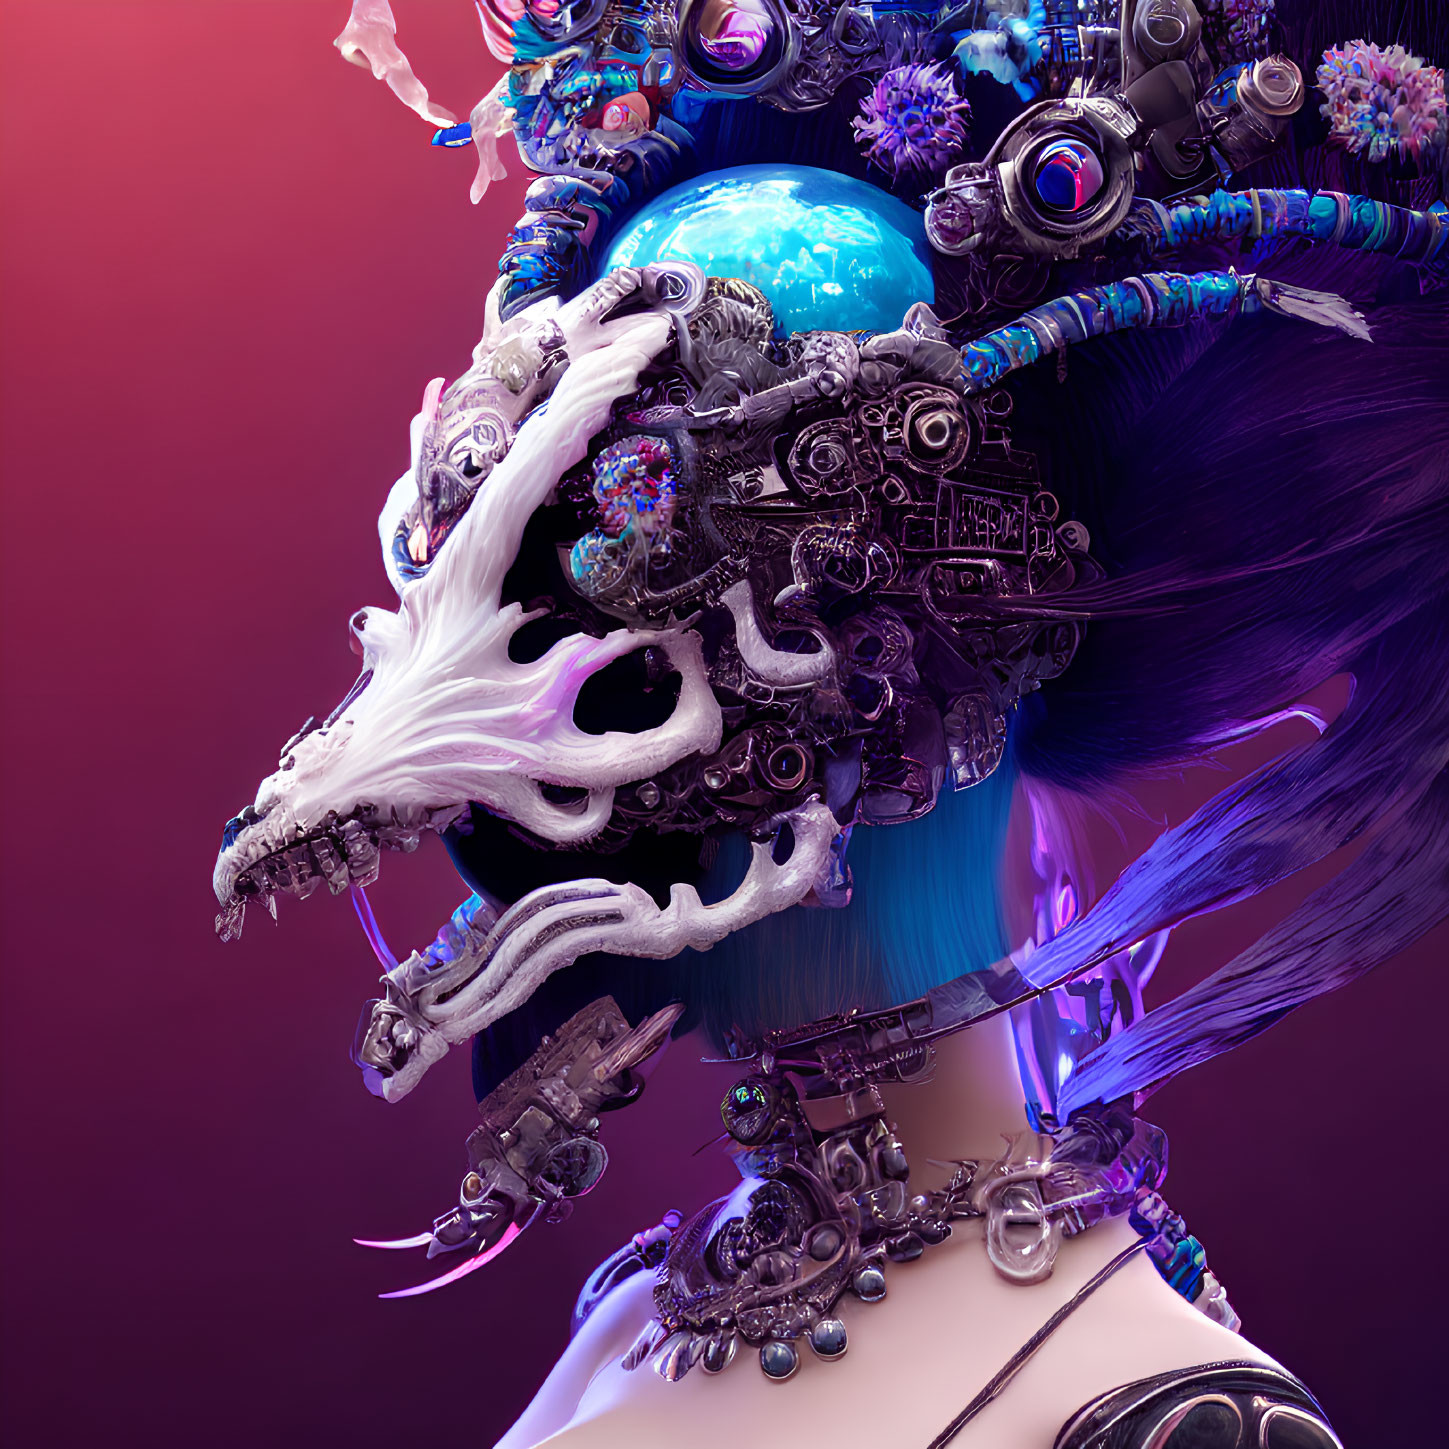 Vibrant cyborg digital art with dragon headgear on purple background